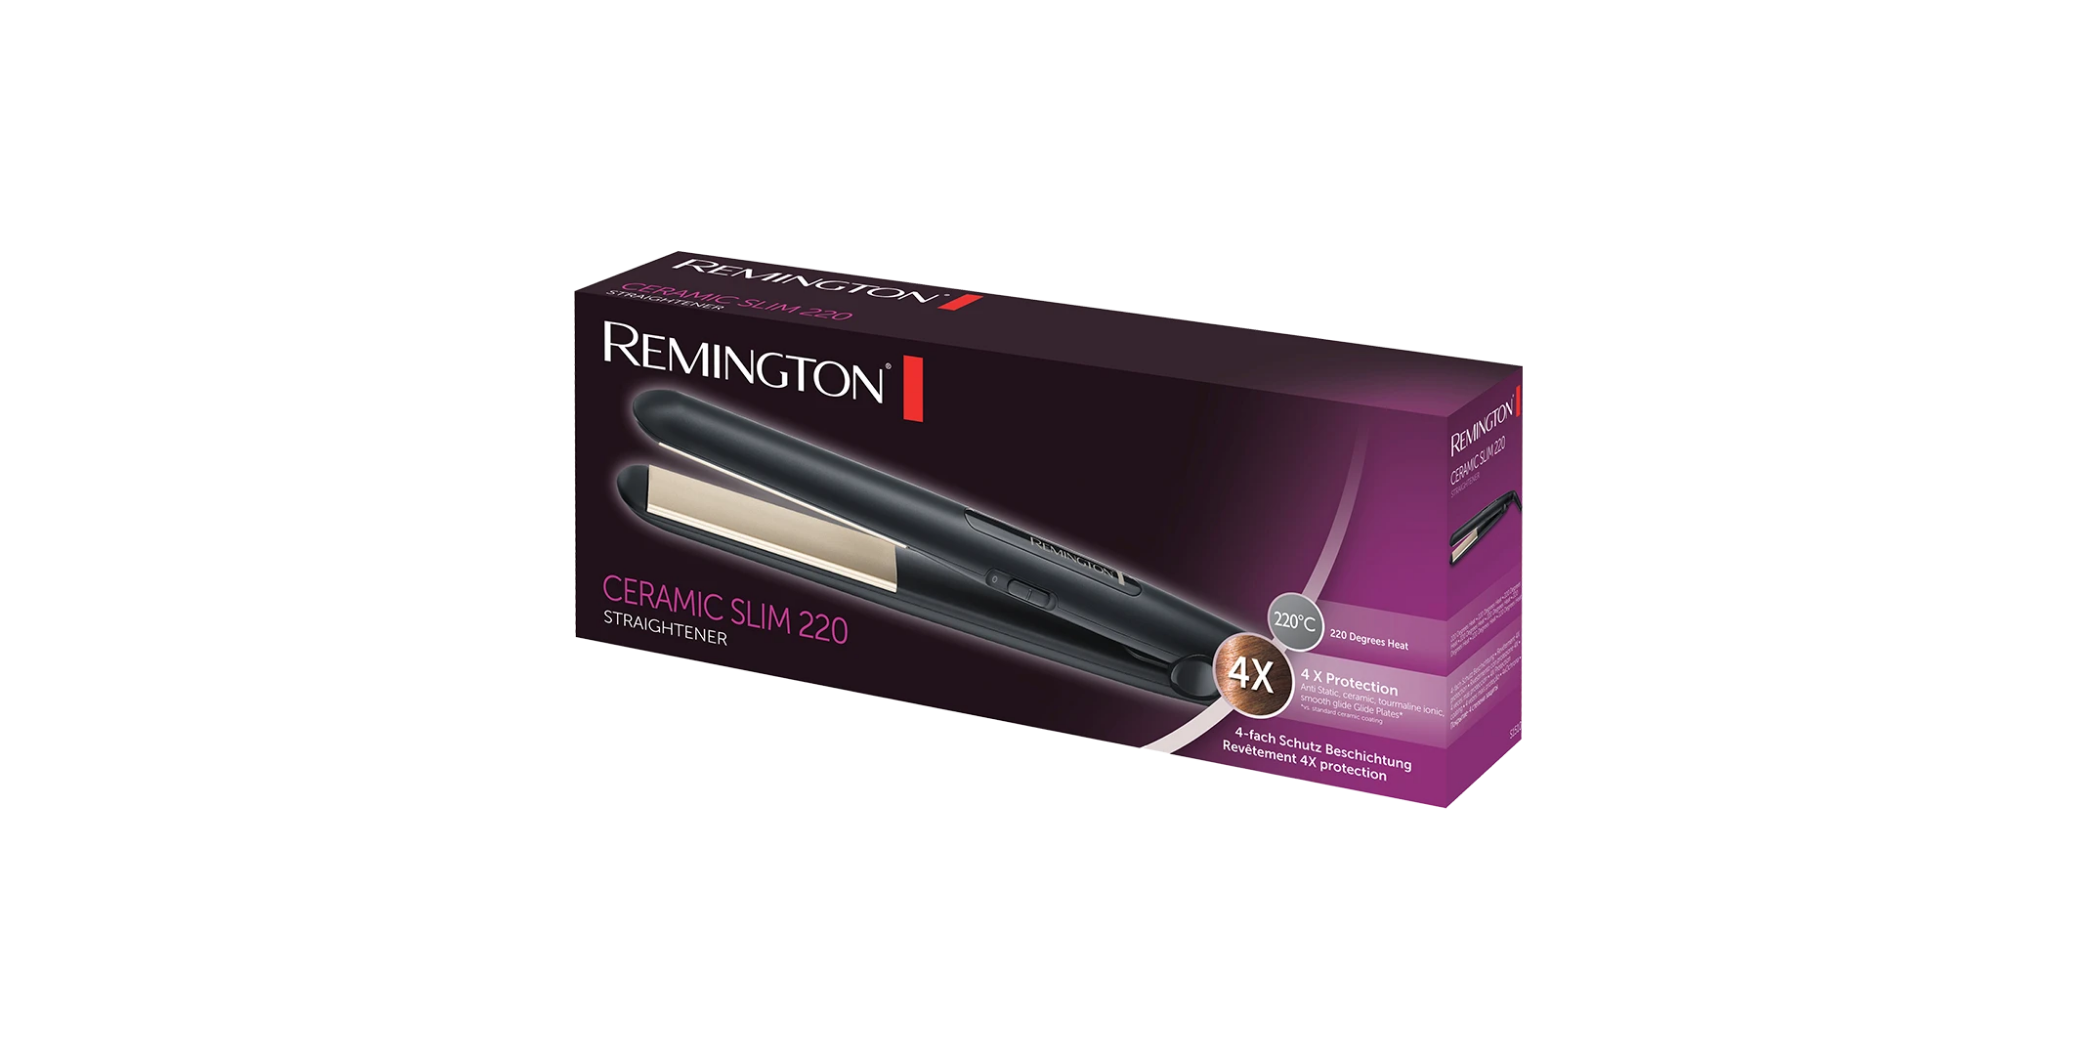 Remington S1510 Slim Straightener